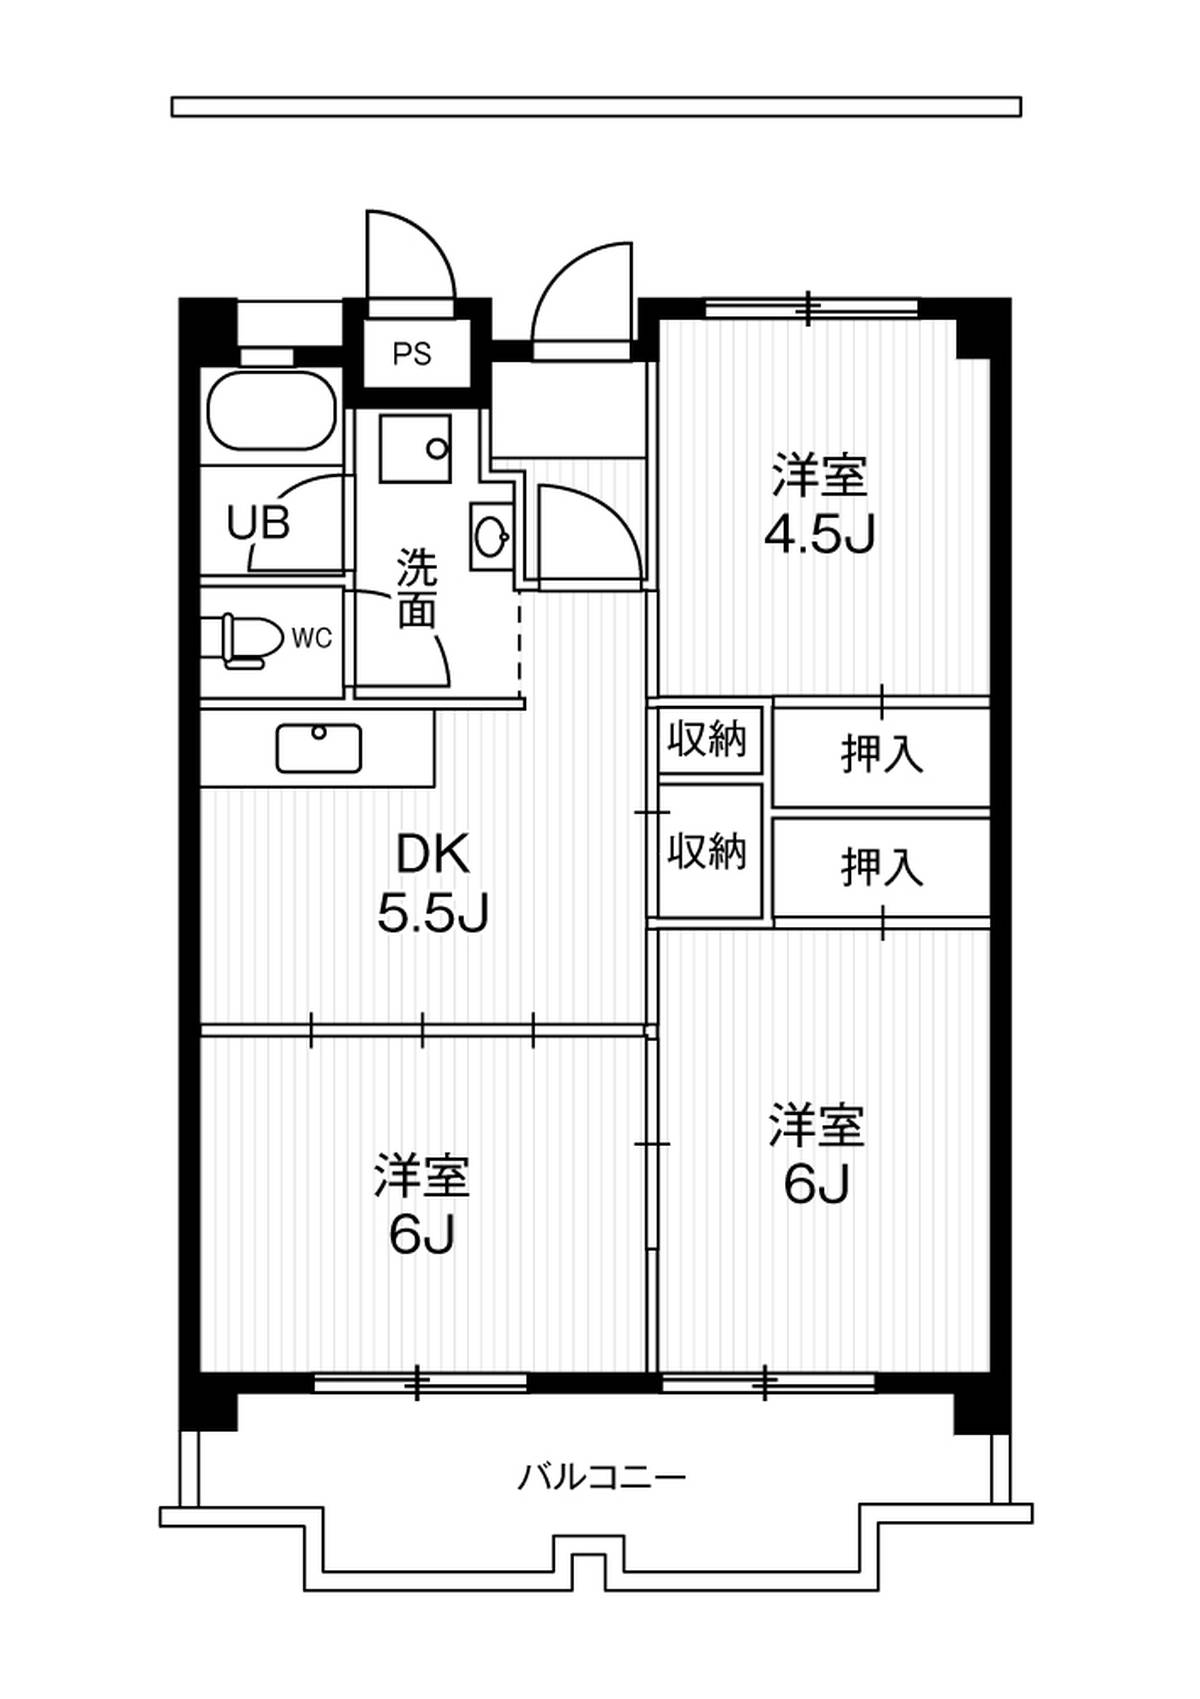 3DK floorplan of Village House Ichinomiya Tower in Ichinomiya-shi